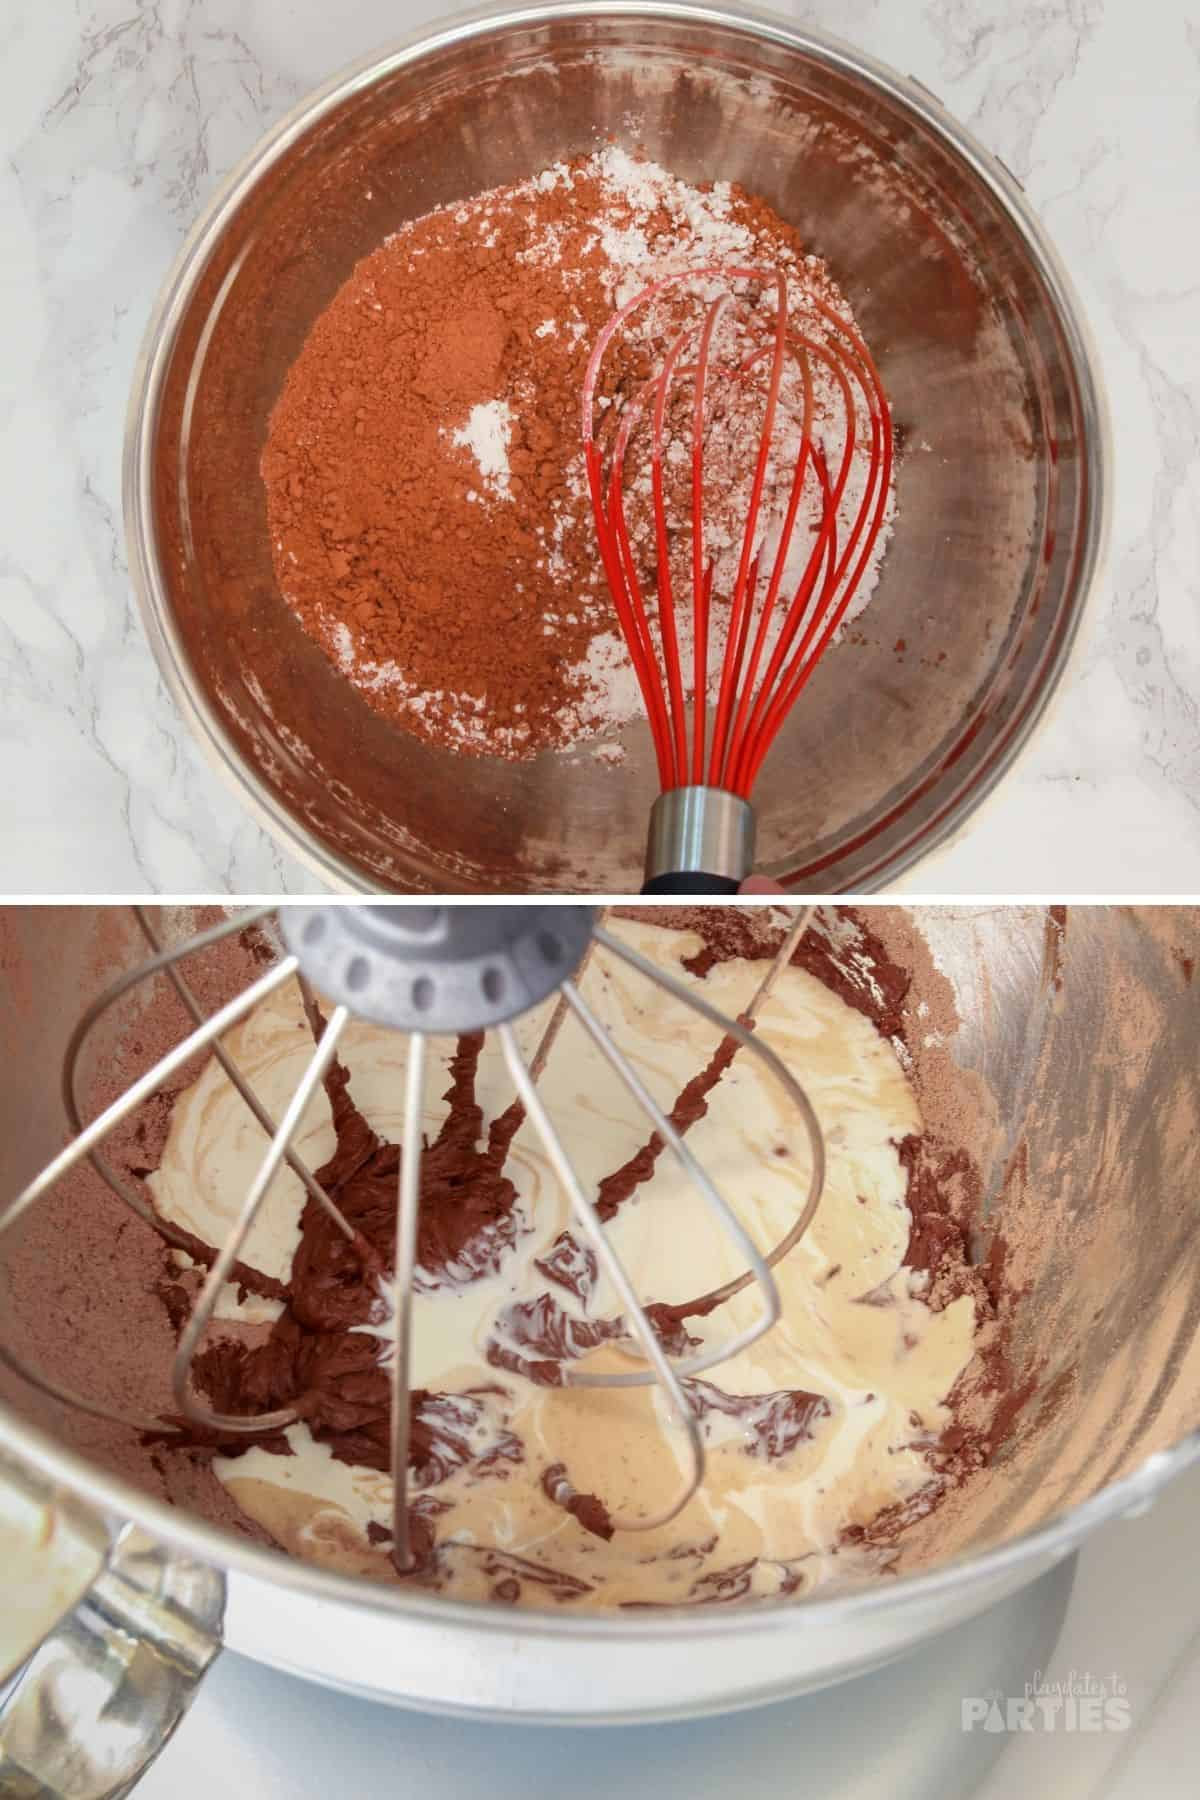 Mixing cocoa powder, powdered sugar, and heavy cream